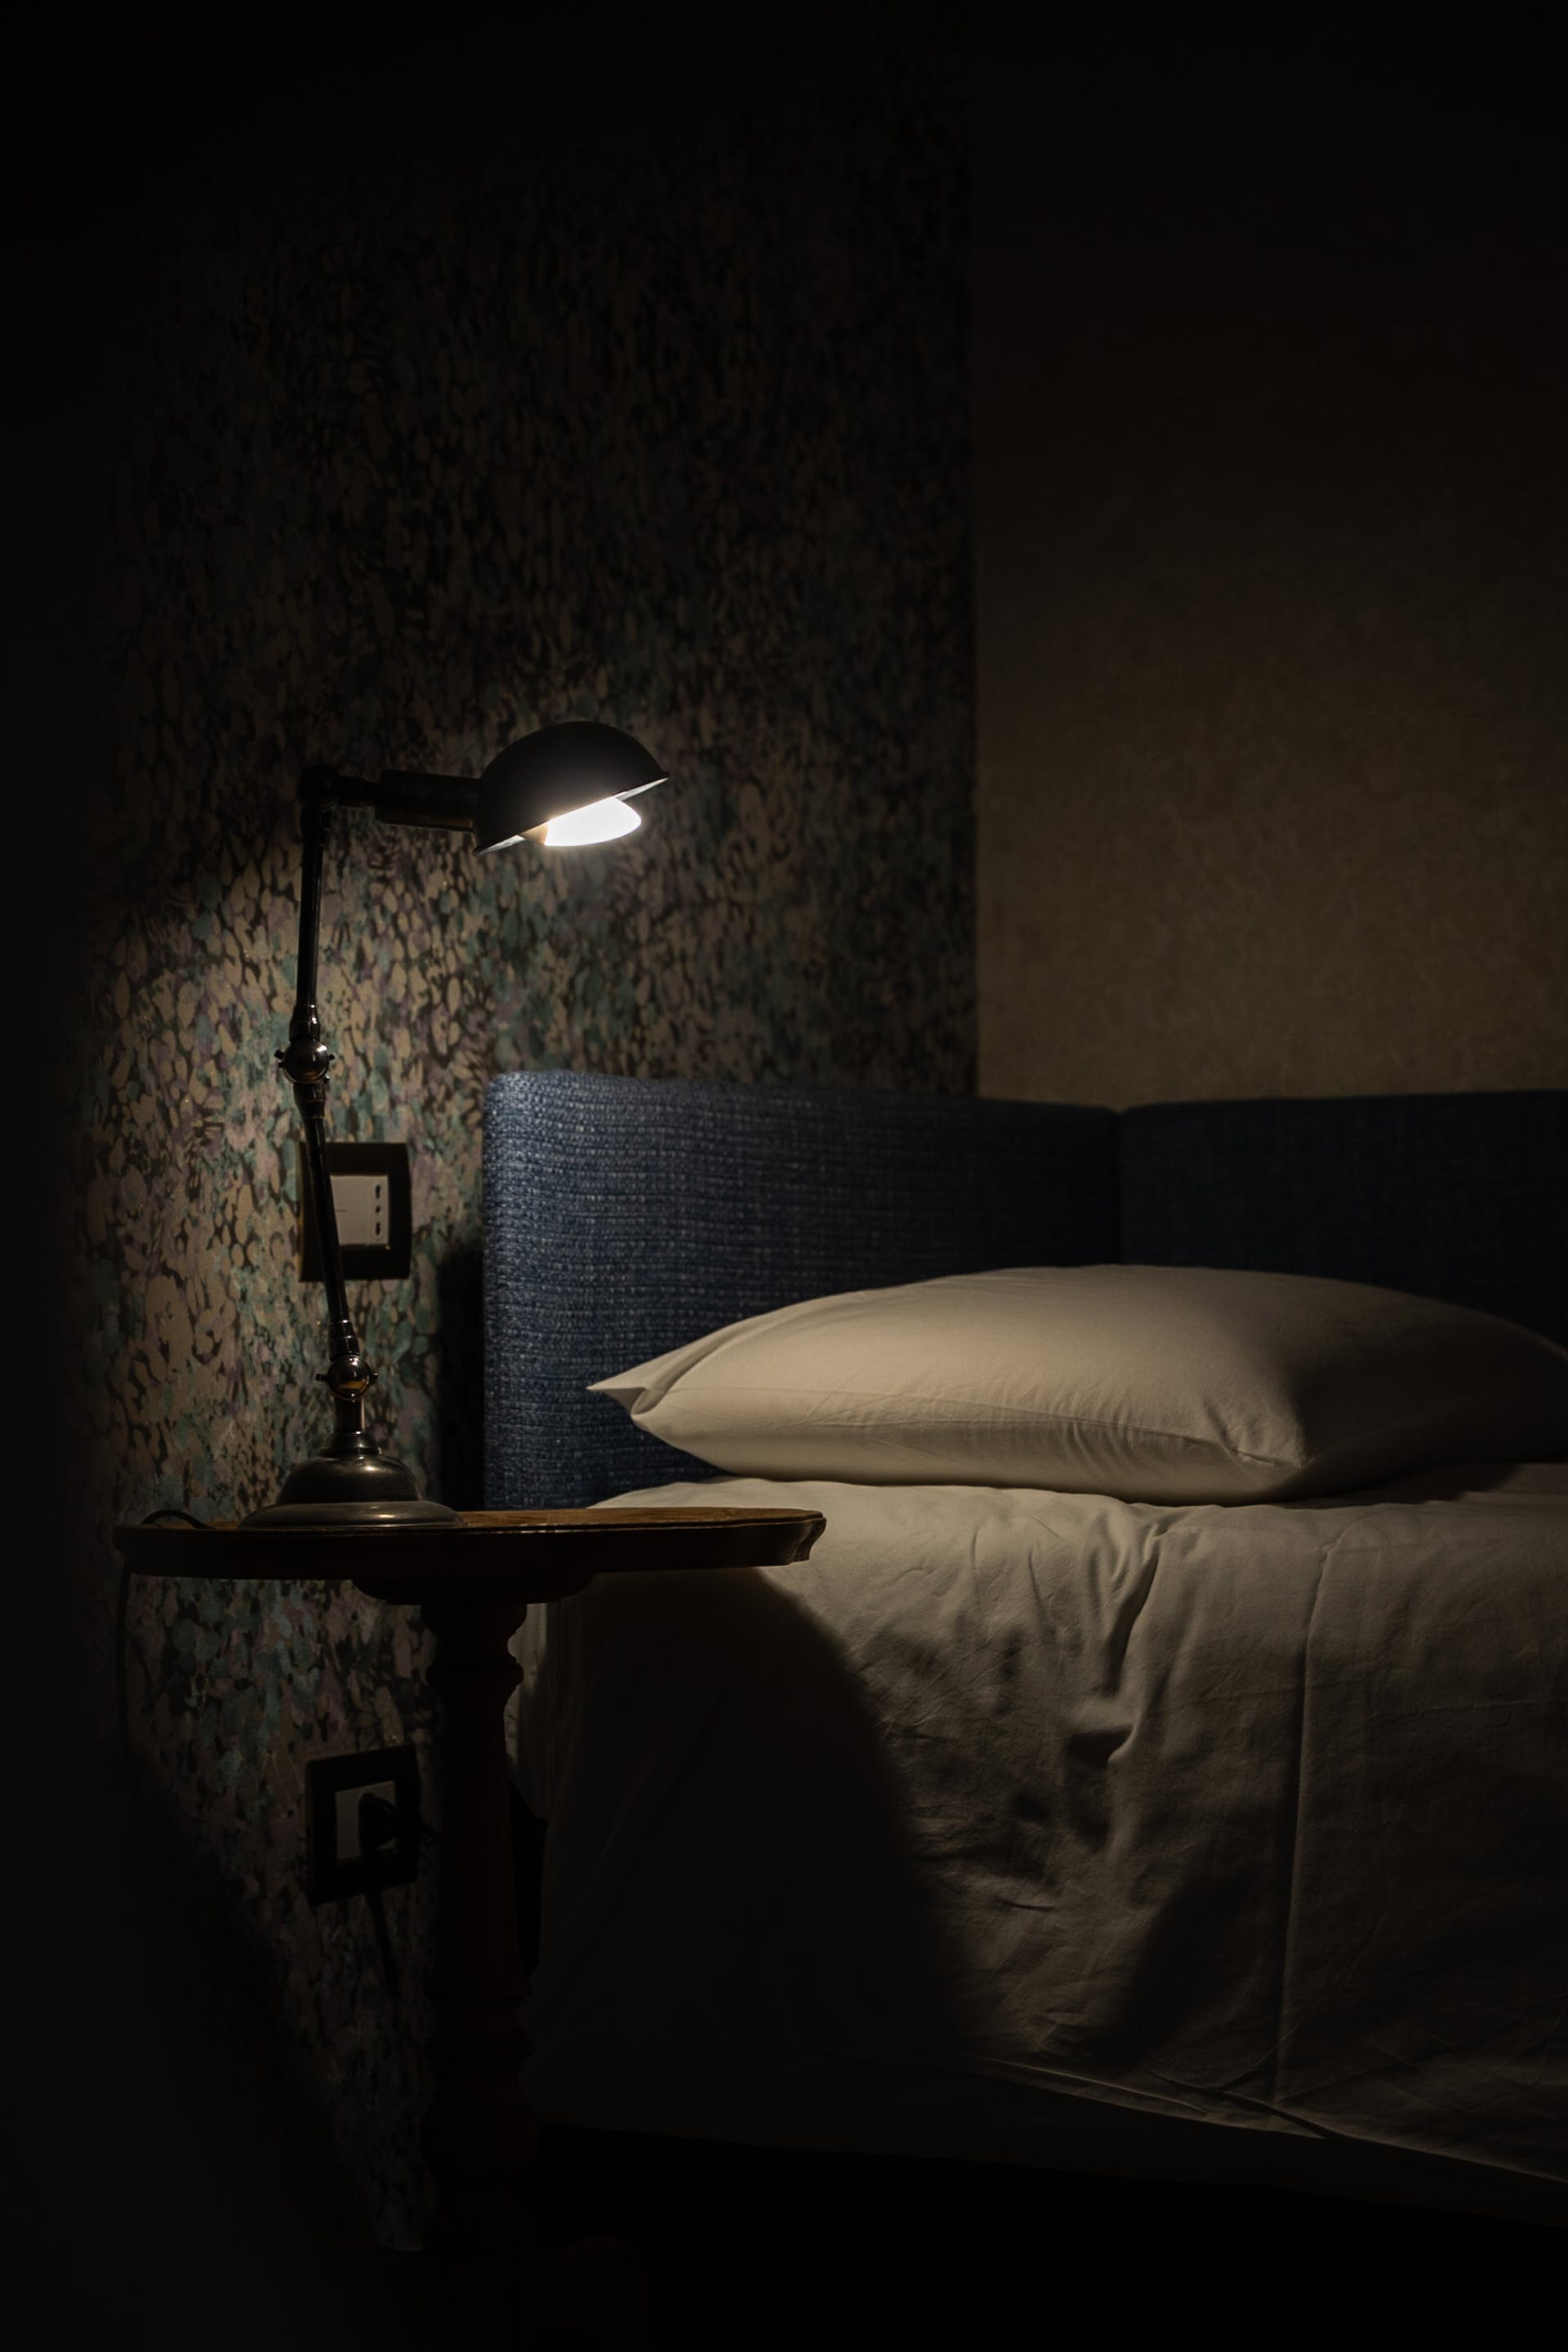 A lamp in a dark room | Source: Pexels